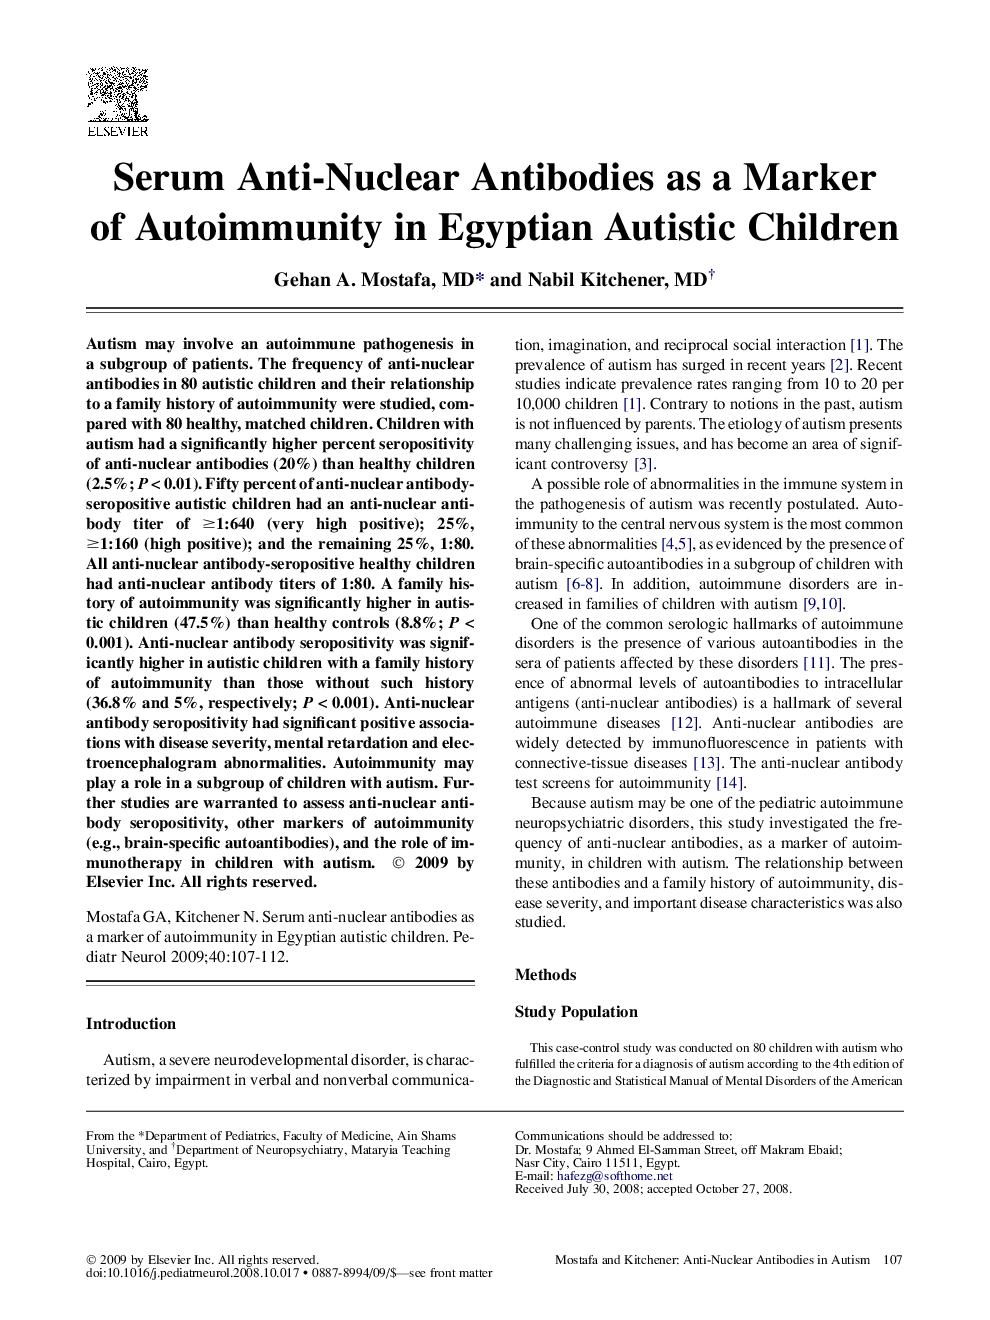 Serum Anti-Nuclear Antibodies as a Marker of Autoimmunity in Egyptian Autistic Children